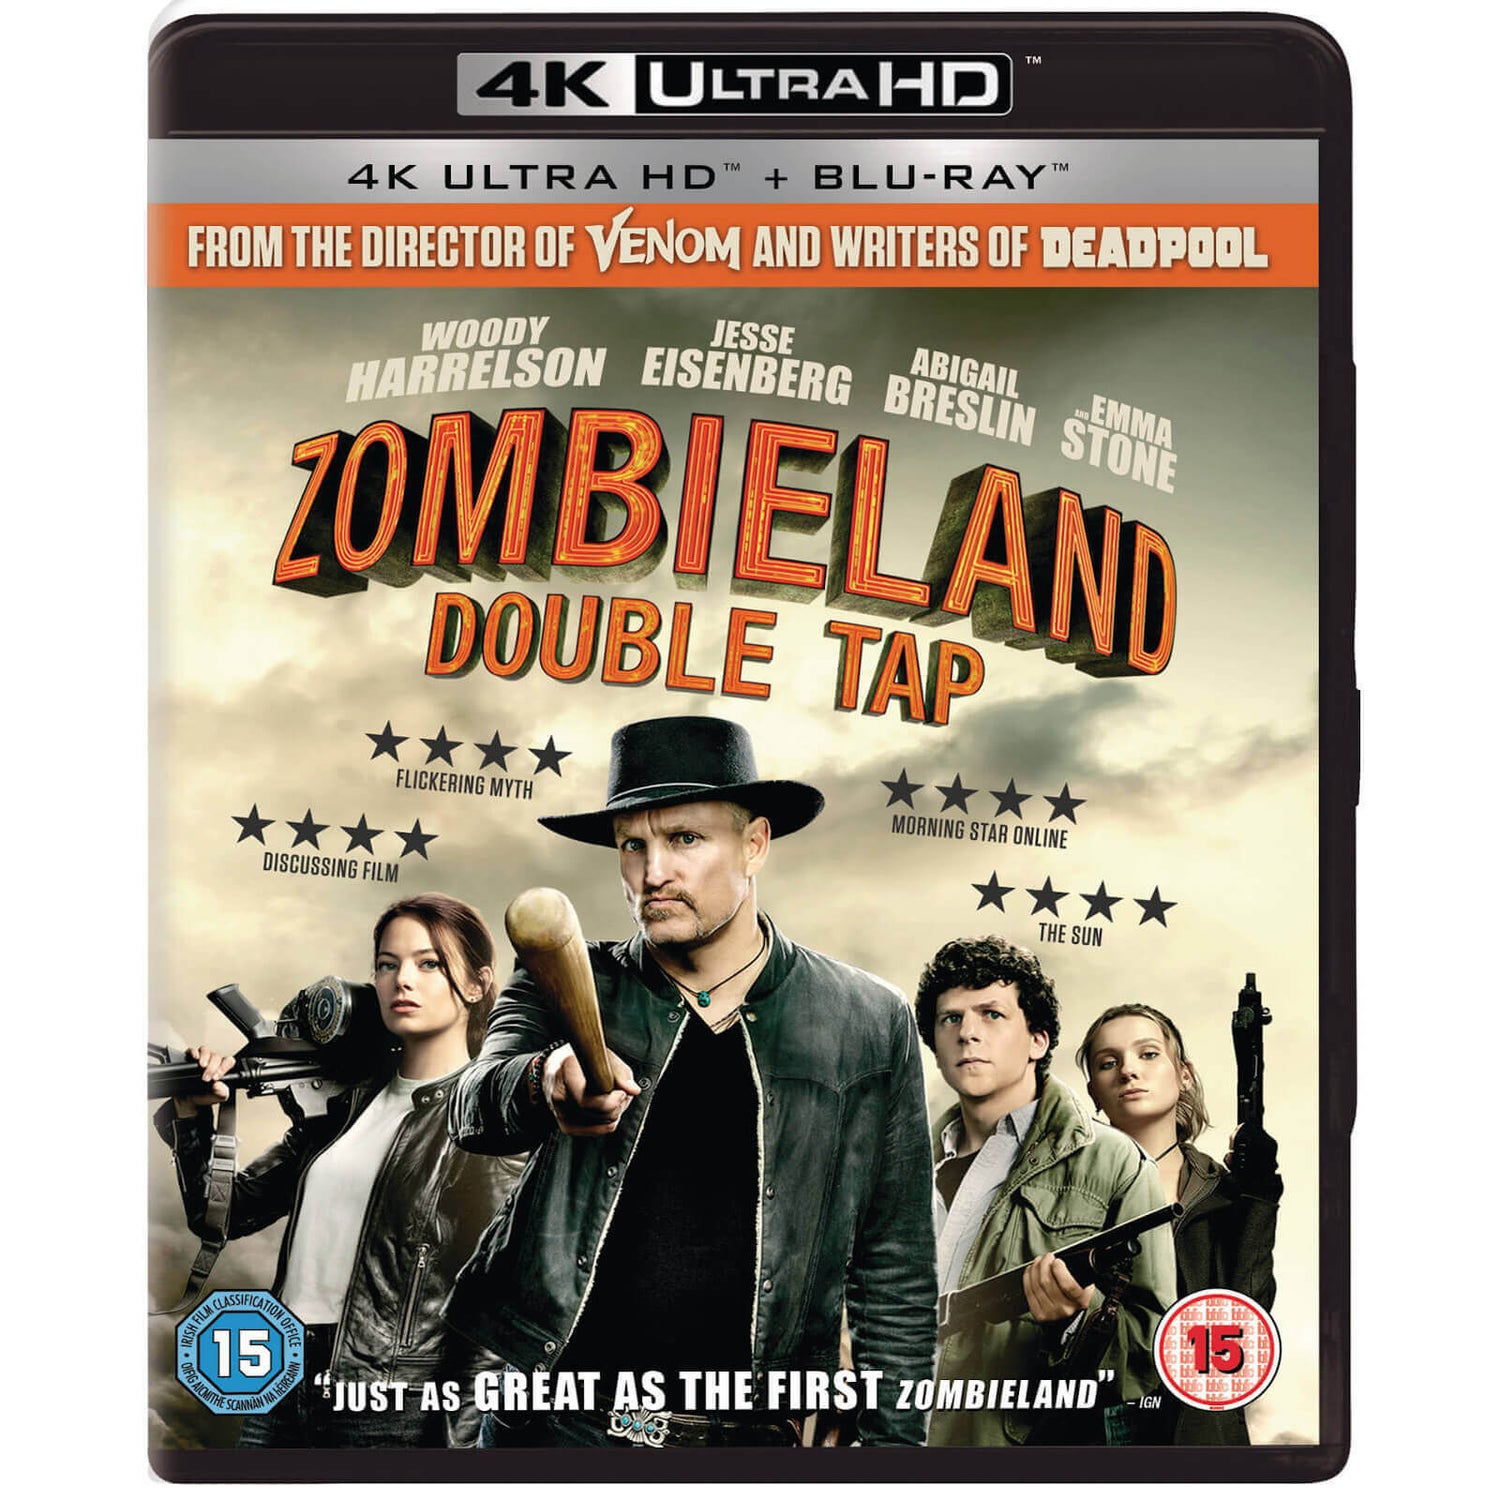 Zombieland: Double Tap - 4K Ultra HD (Includes Blu-ray)